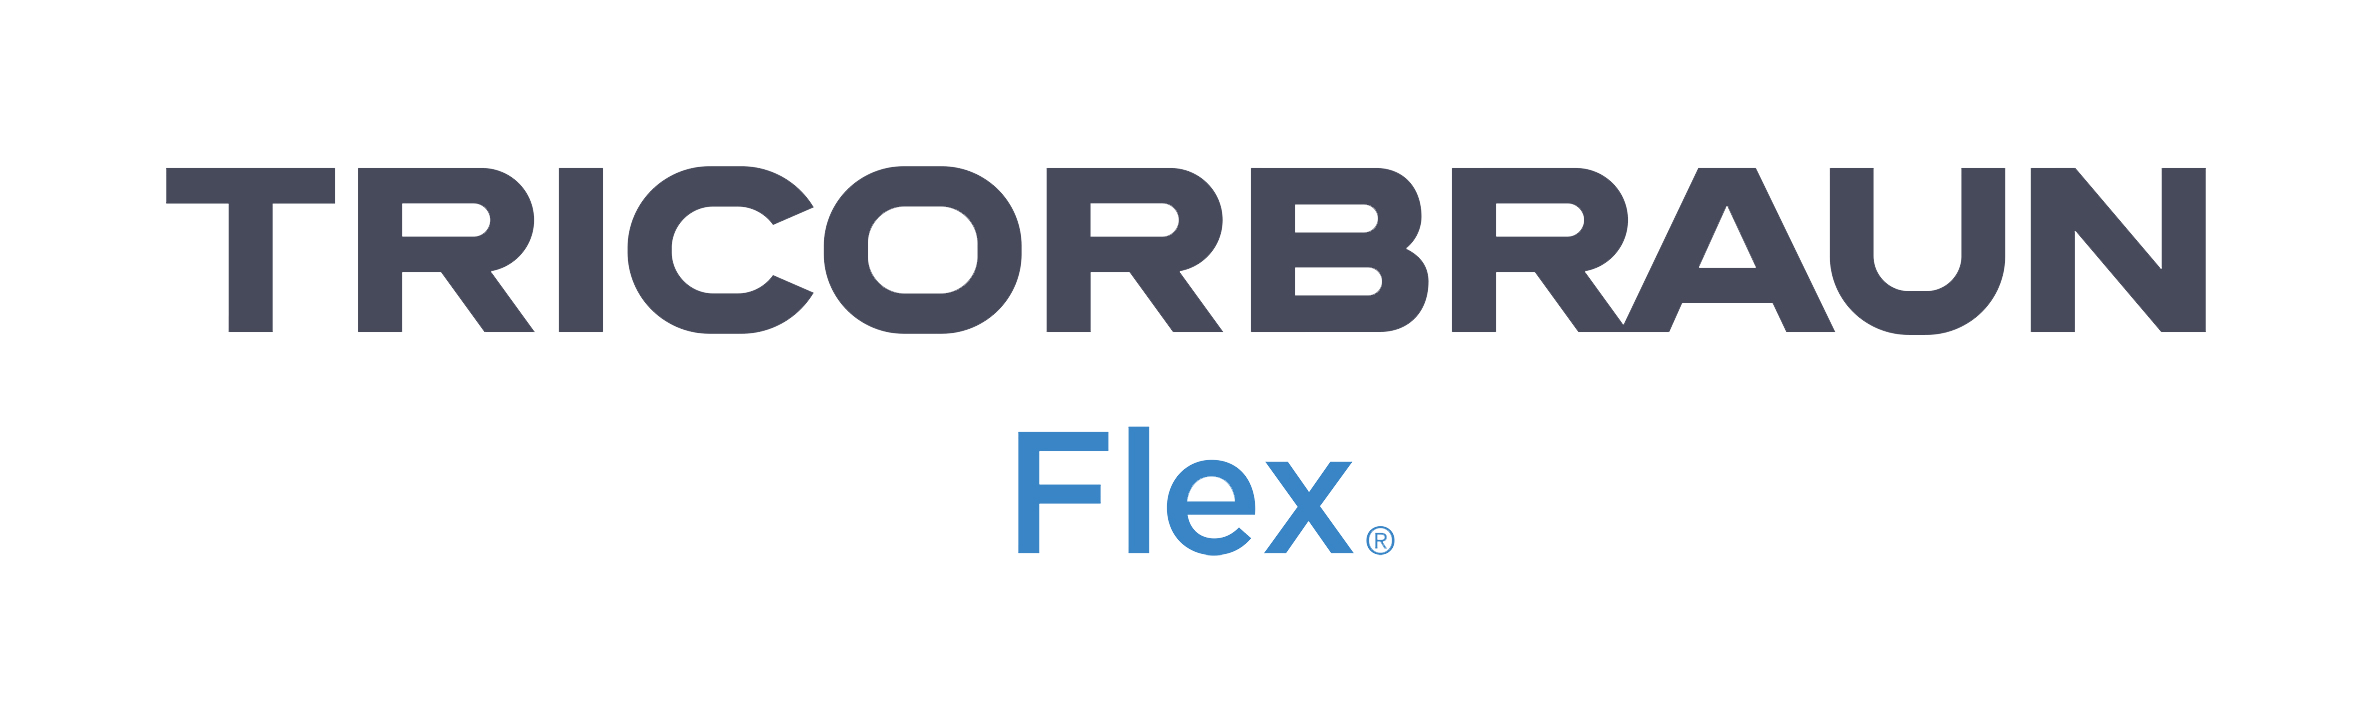 Tricor Braun Flex Logo